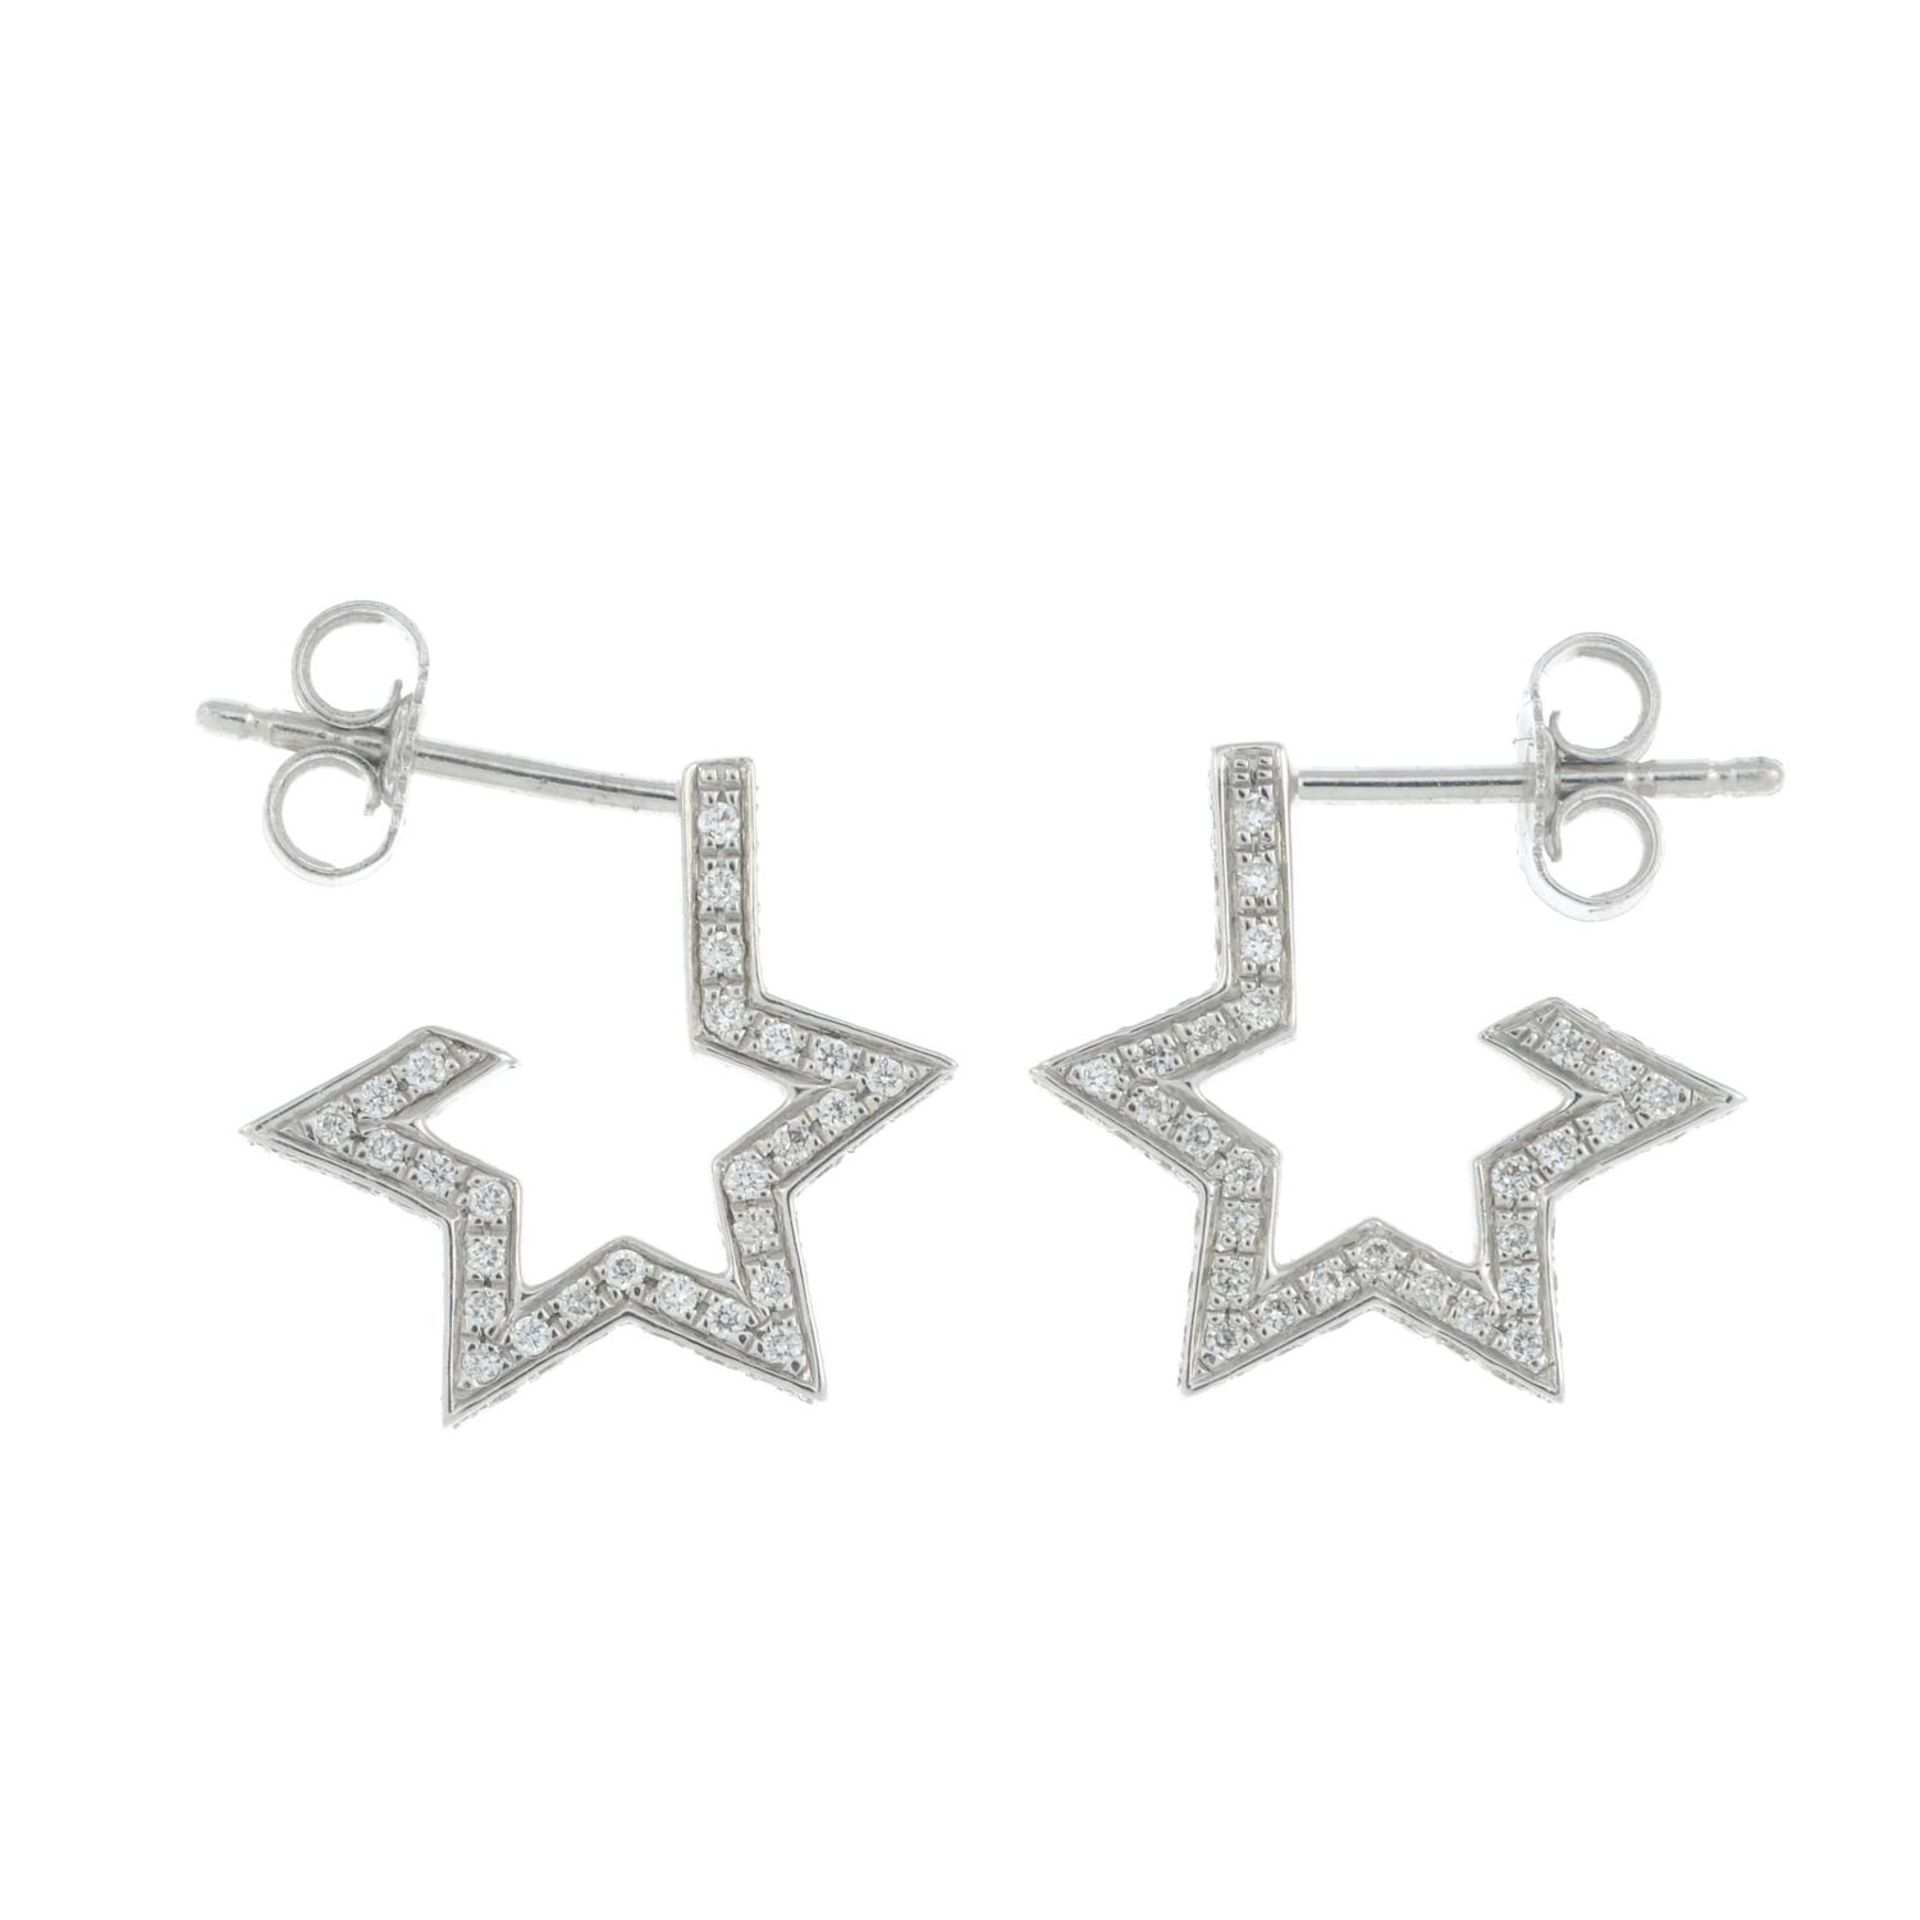 A pair of brilliant-cut diamond star earrings,